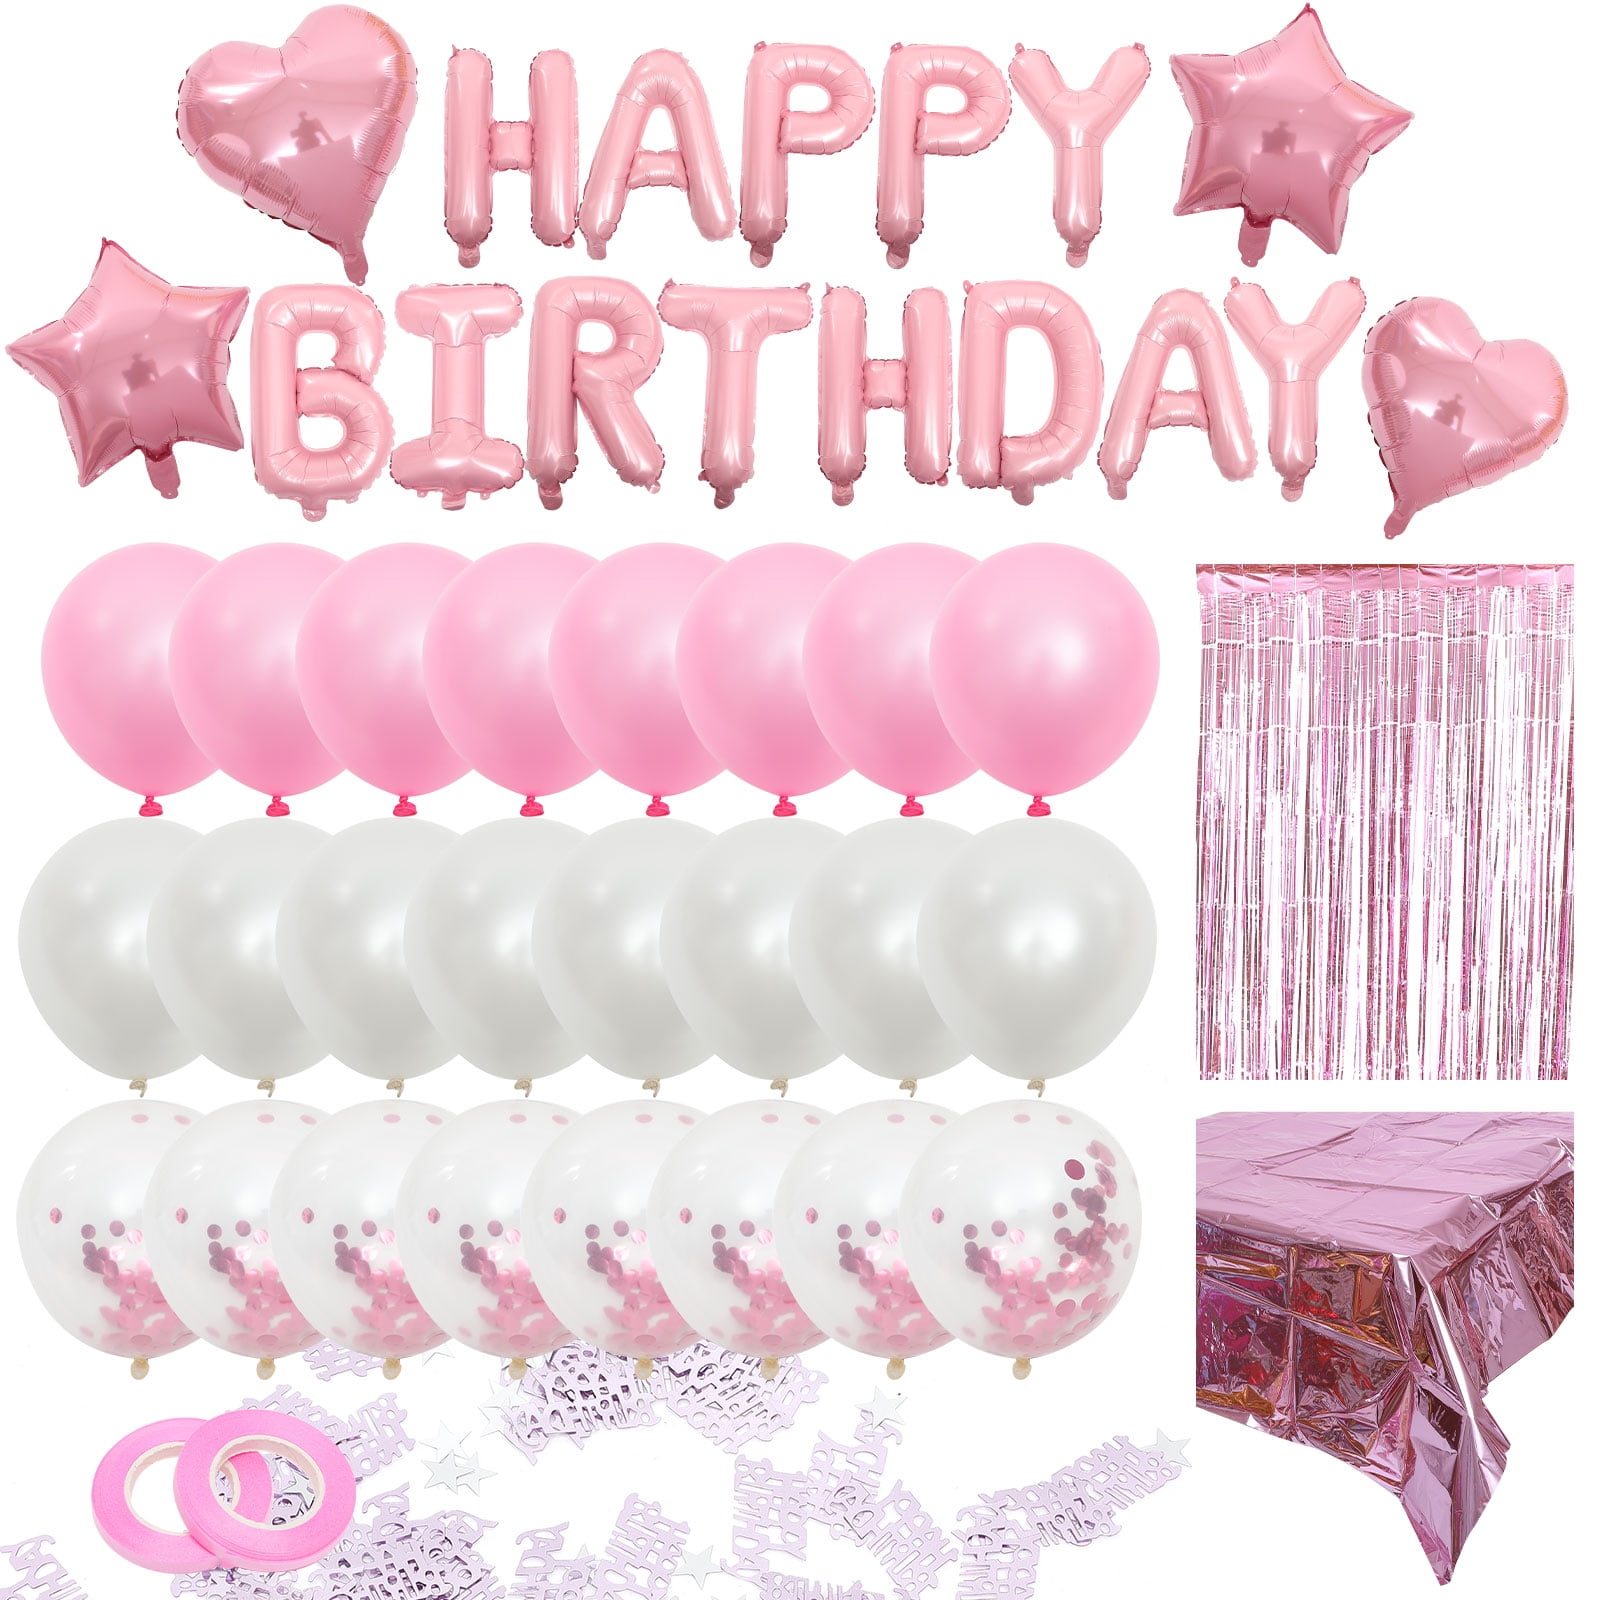 Lnkoo Birthday Decorations, Rainbow Birthday Party Decorations for Women, Girls Happy Birthday Party Decorations with Birthday Banner, Paper Pom Poms